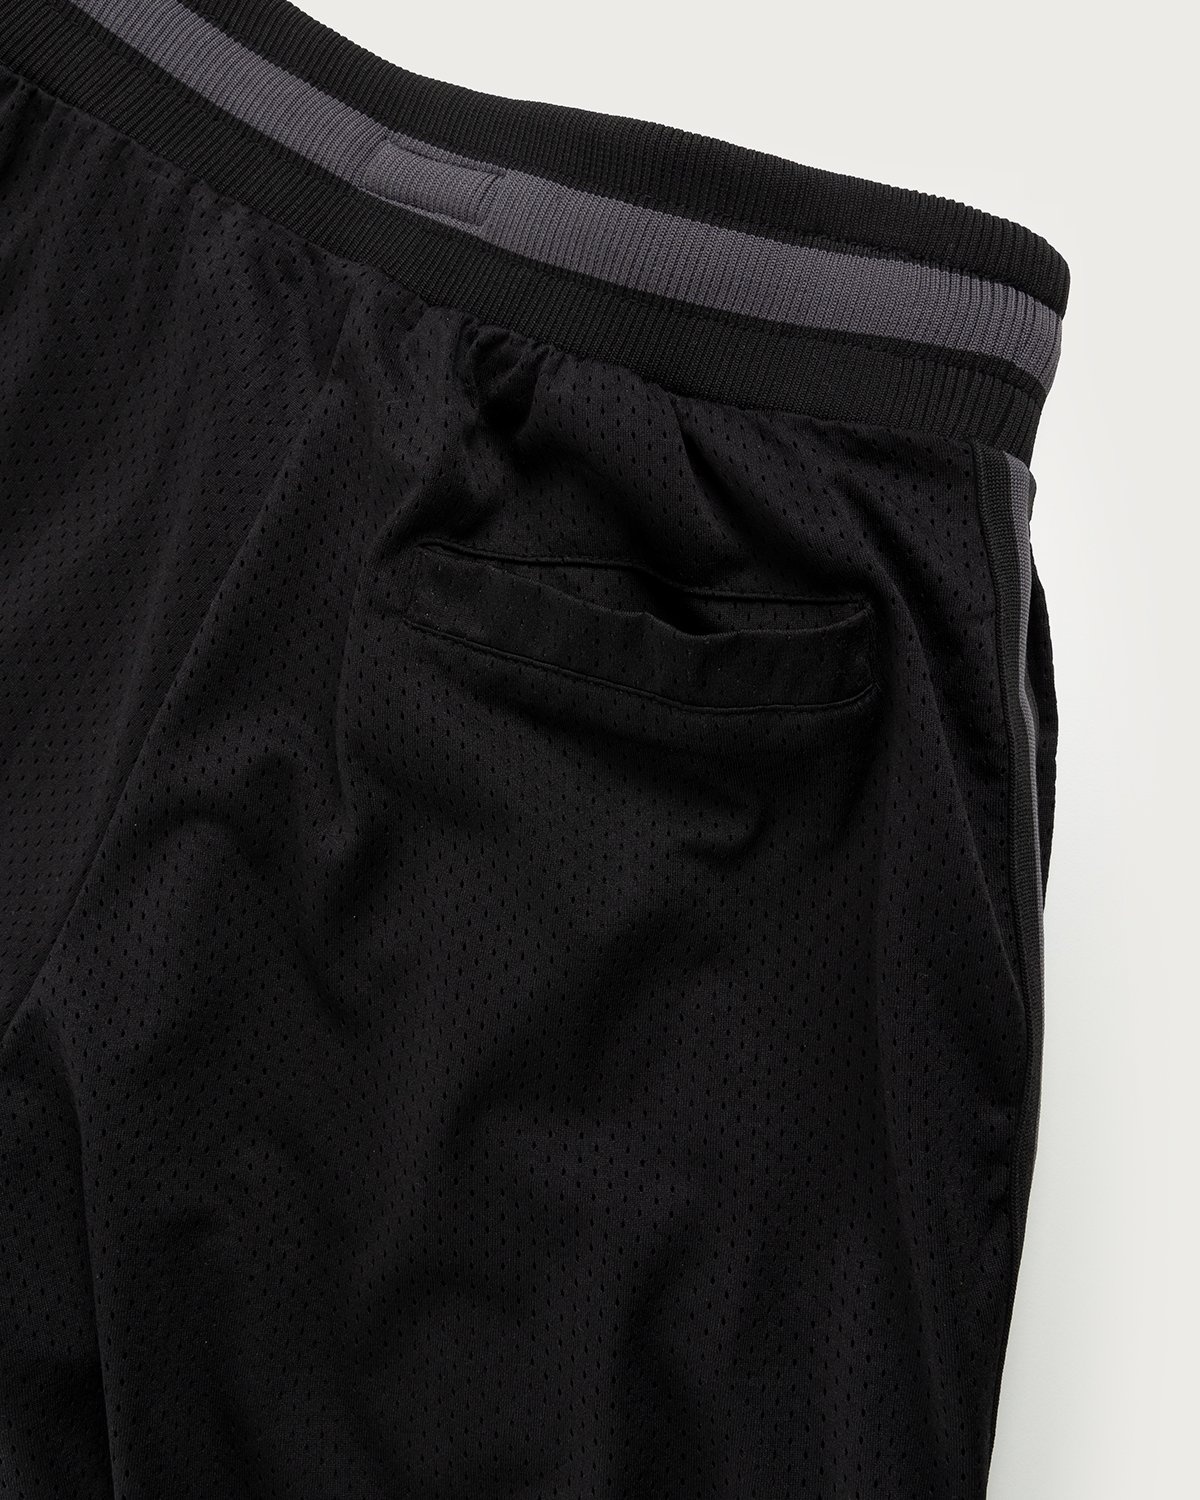 Market x UCLA x Highsnobiety – HS Sports Mesh Bruin Shorts Black - Shorts - Black - Image 4